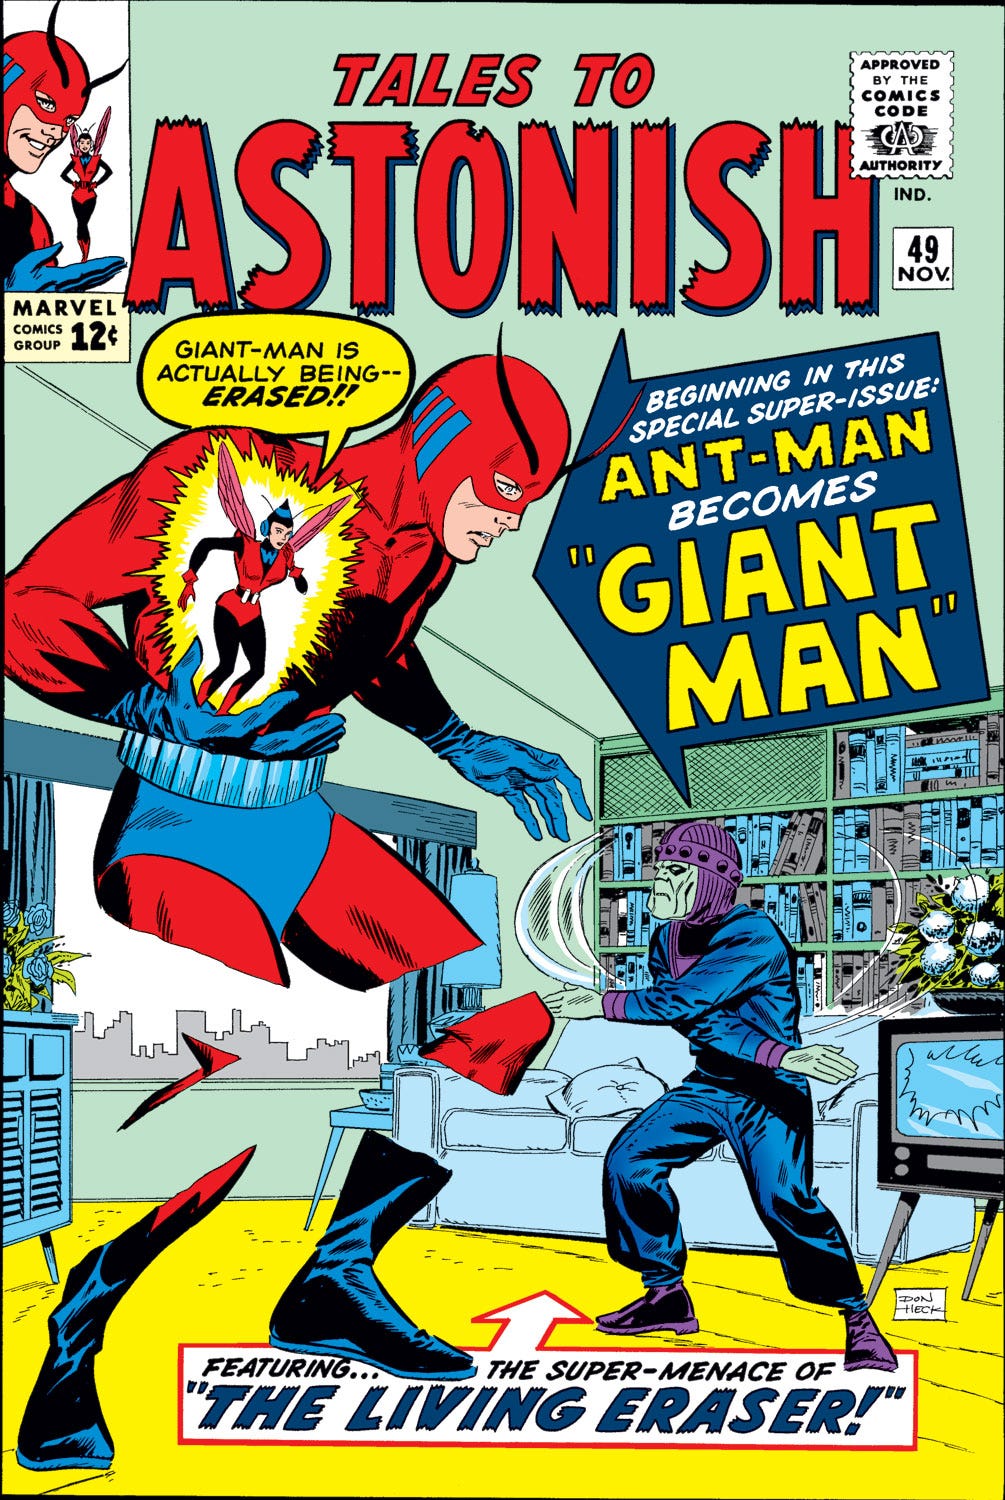 Tales to Astonish Vol 1 49 | Marvel Database | Fandom